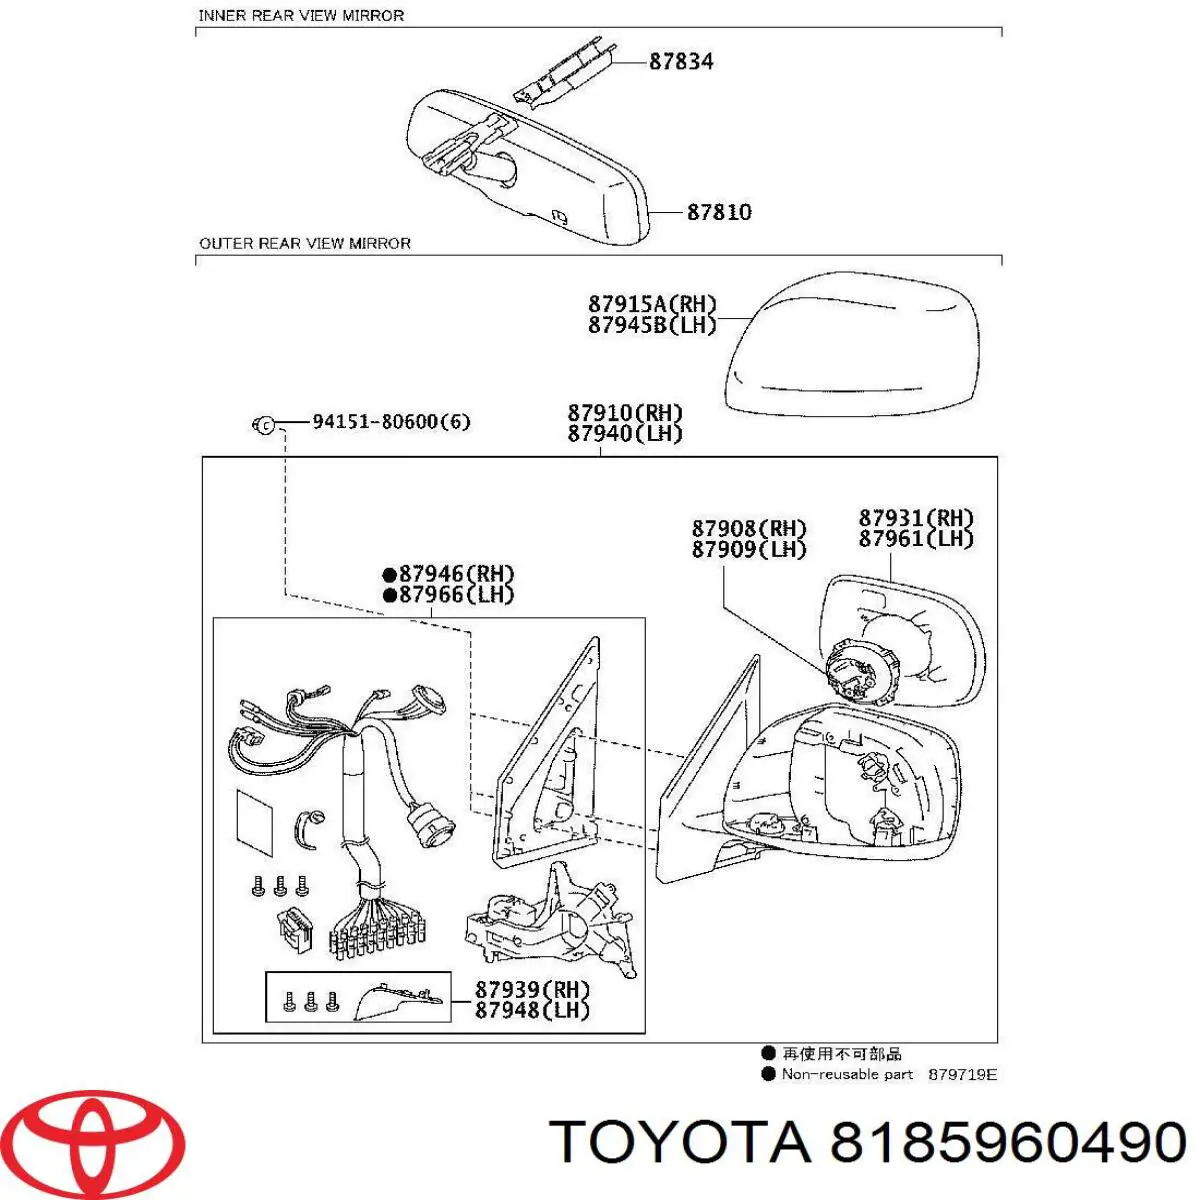 8185960490 Toyota